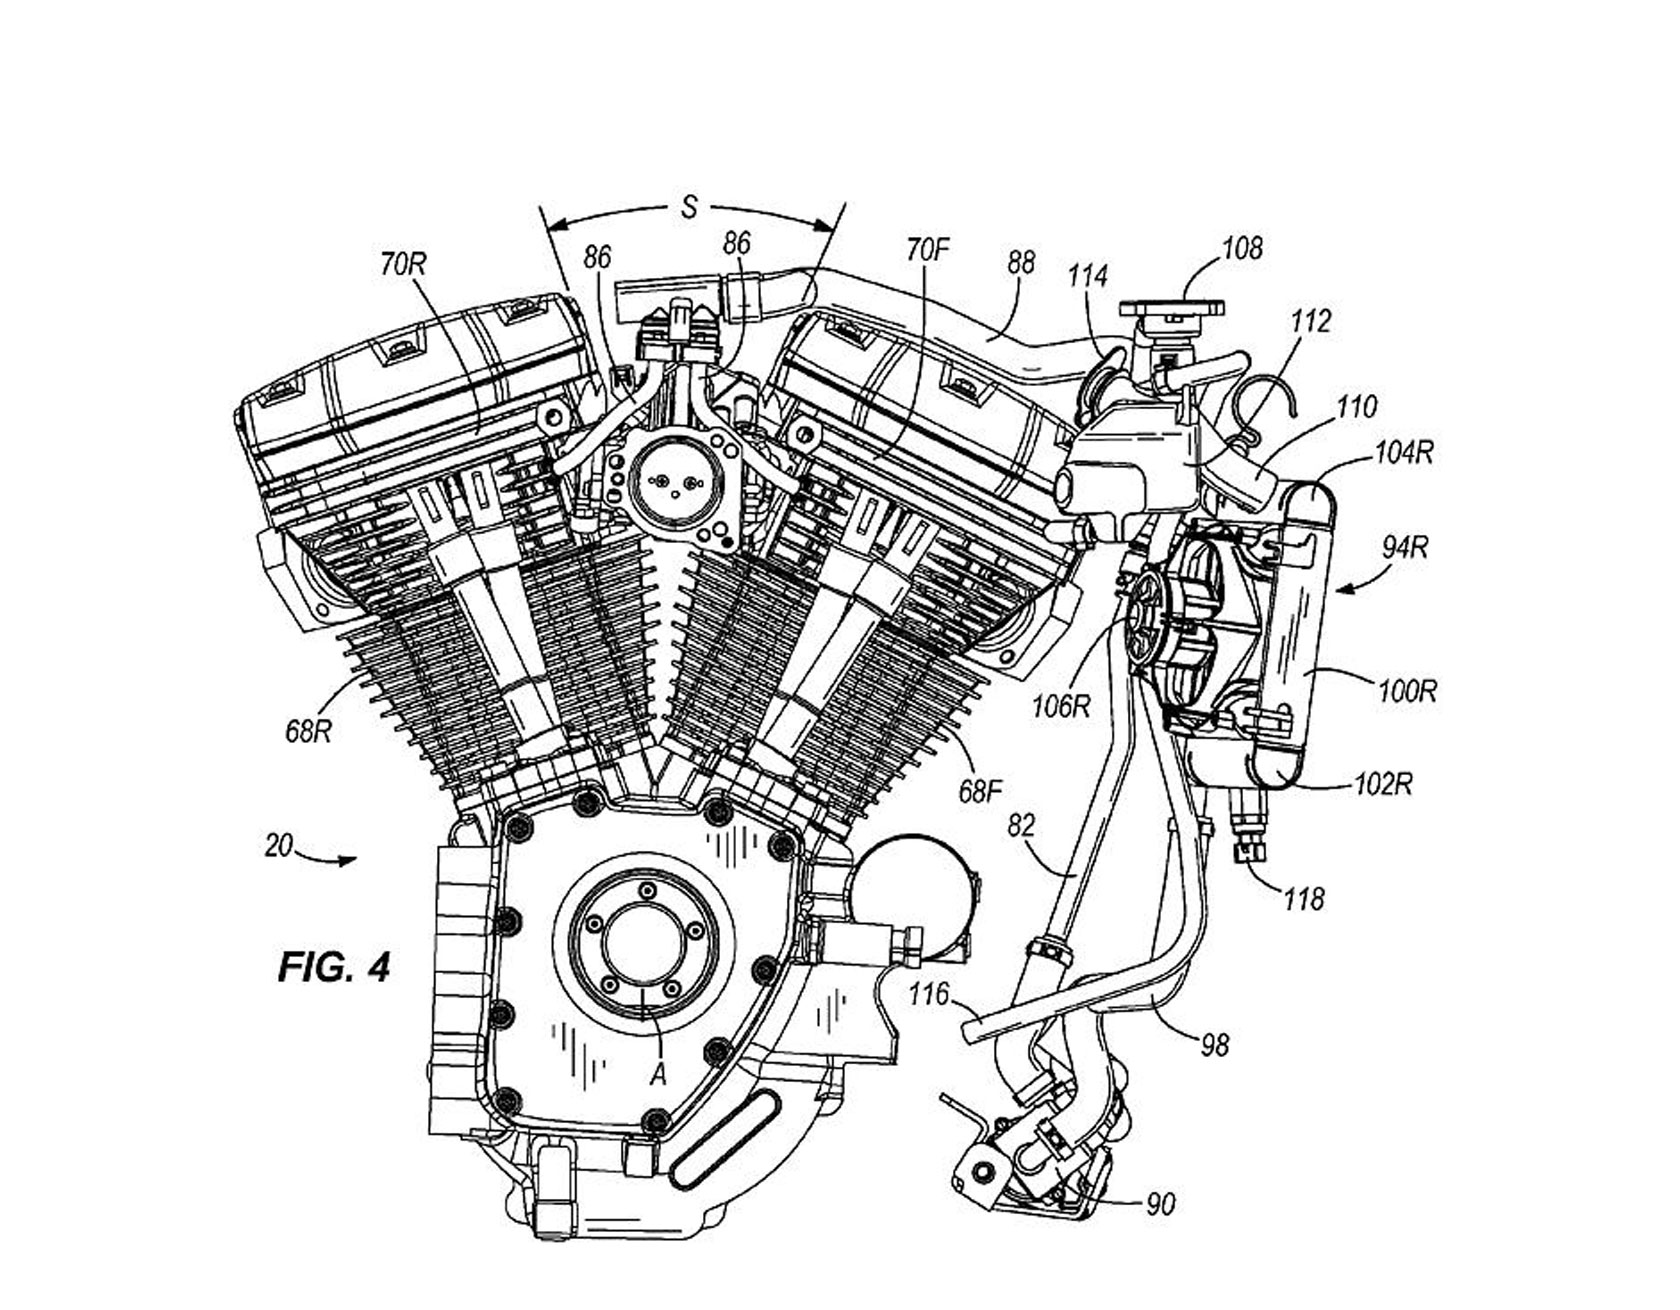 2011 Harley-Davidson Water Cooled Engine US Patent, concept, spy shots